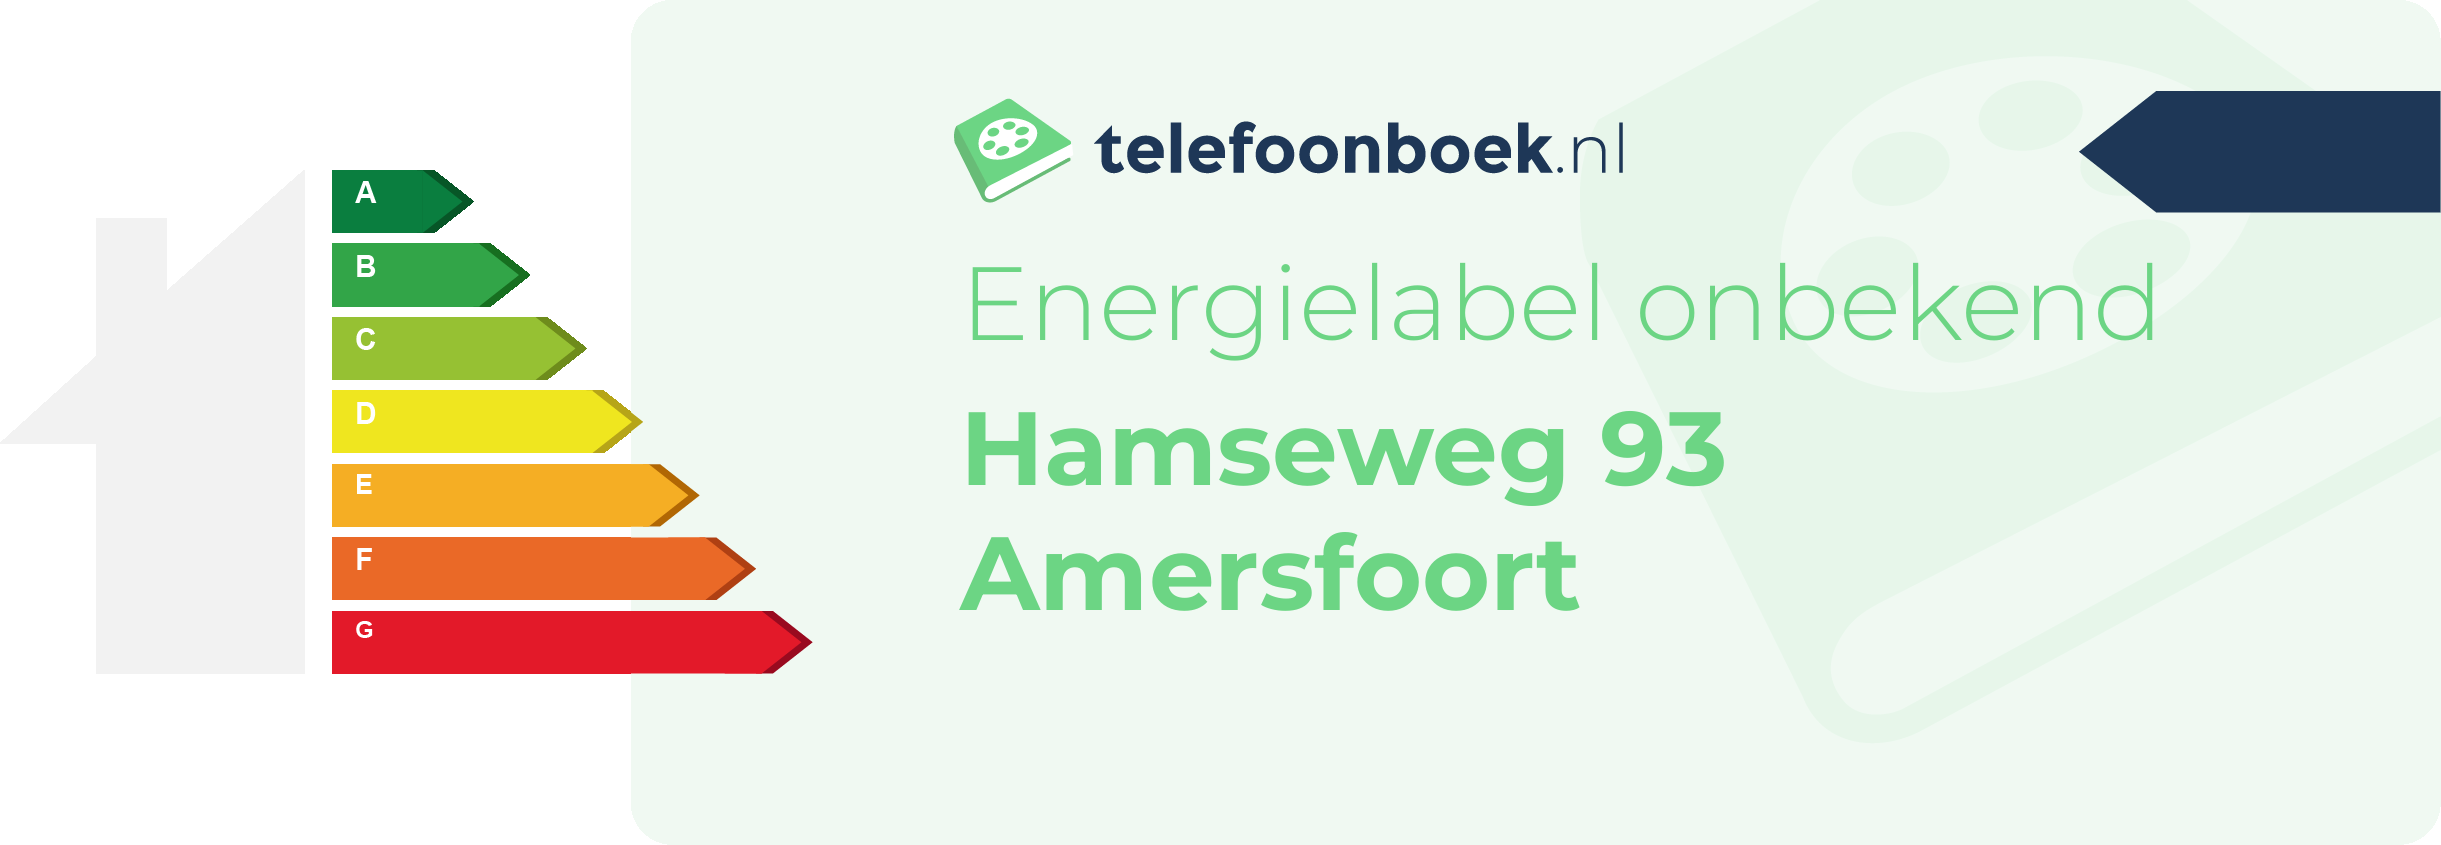 Energielabel Hamseweg 93 Amersfoort